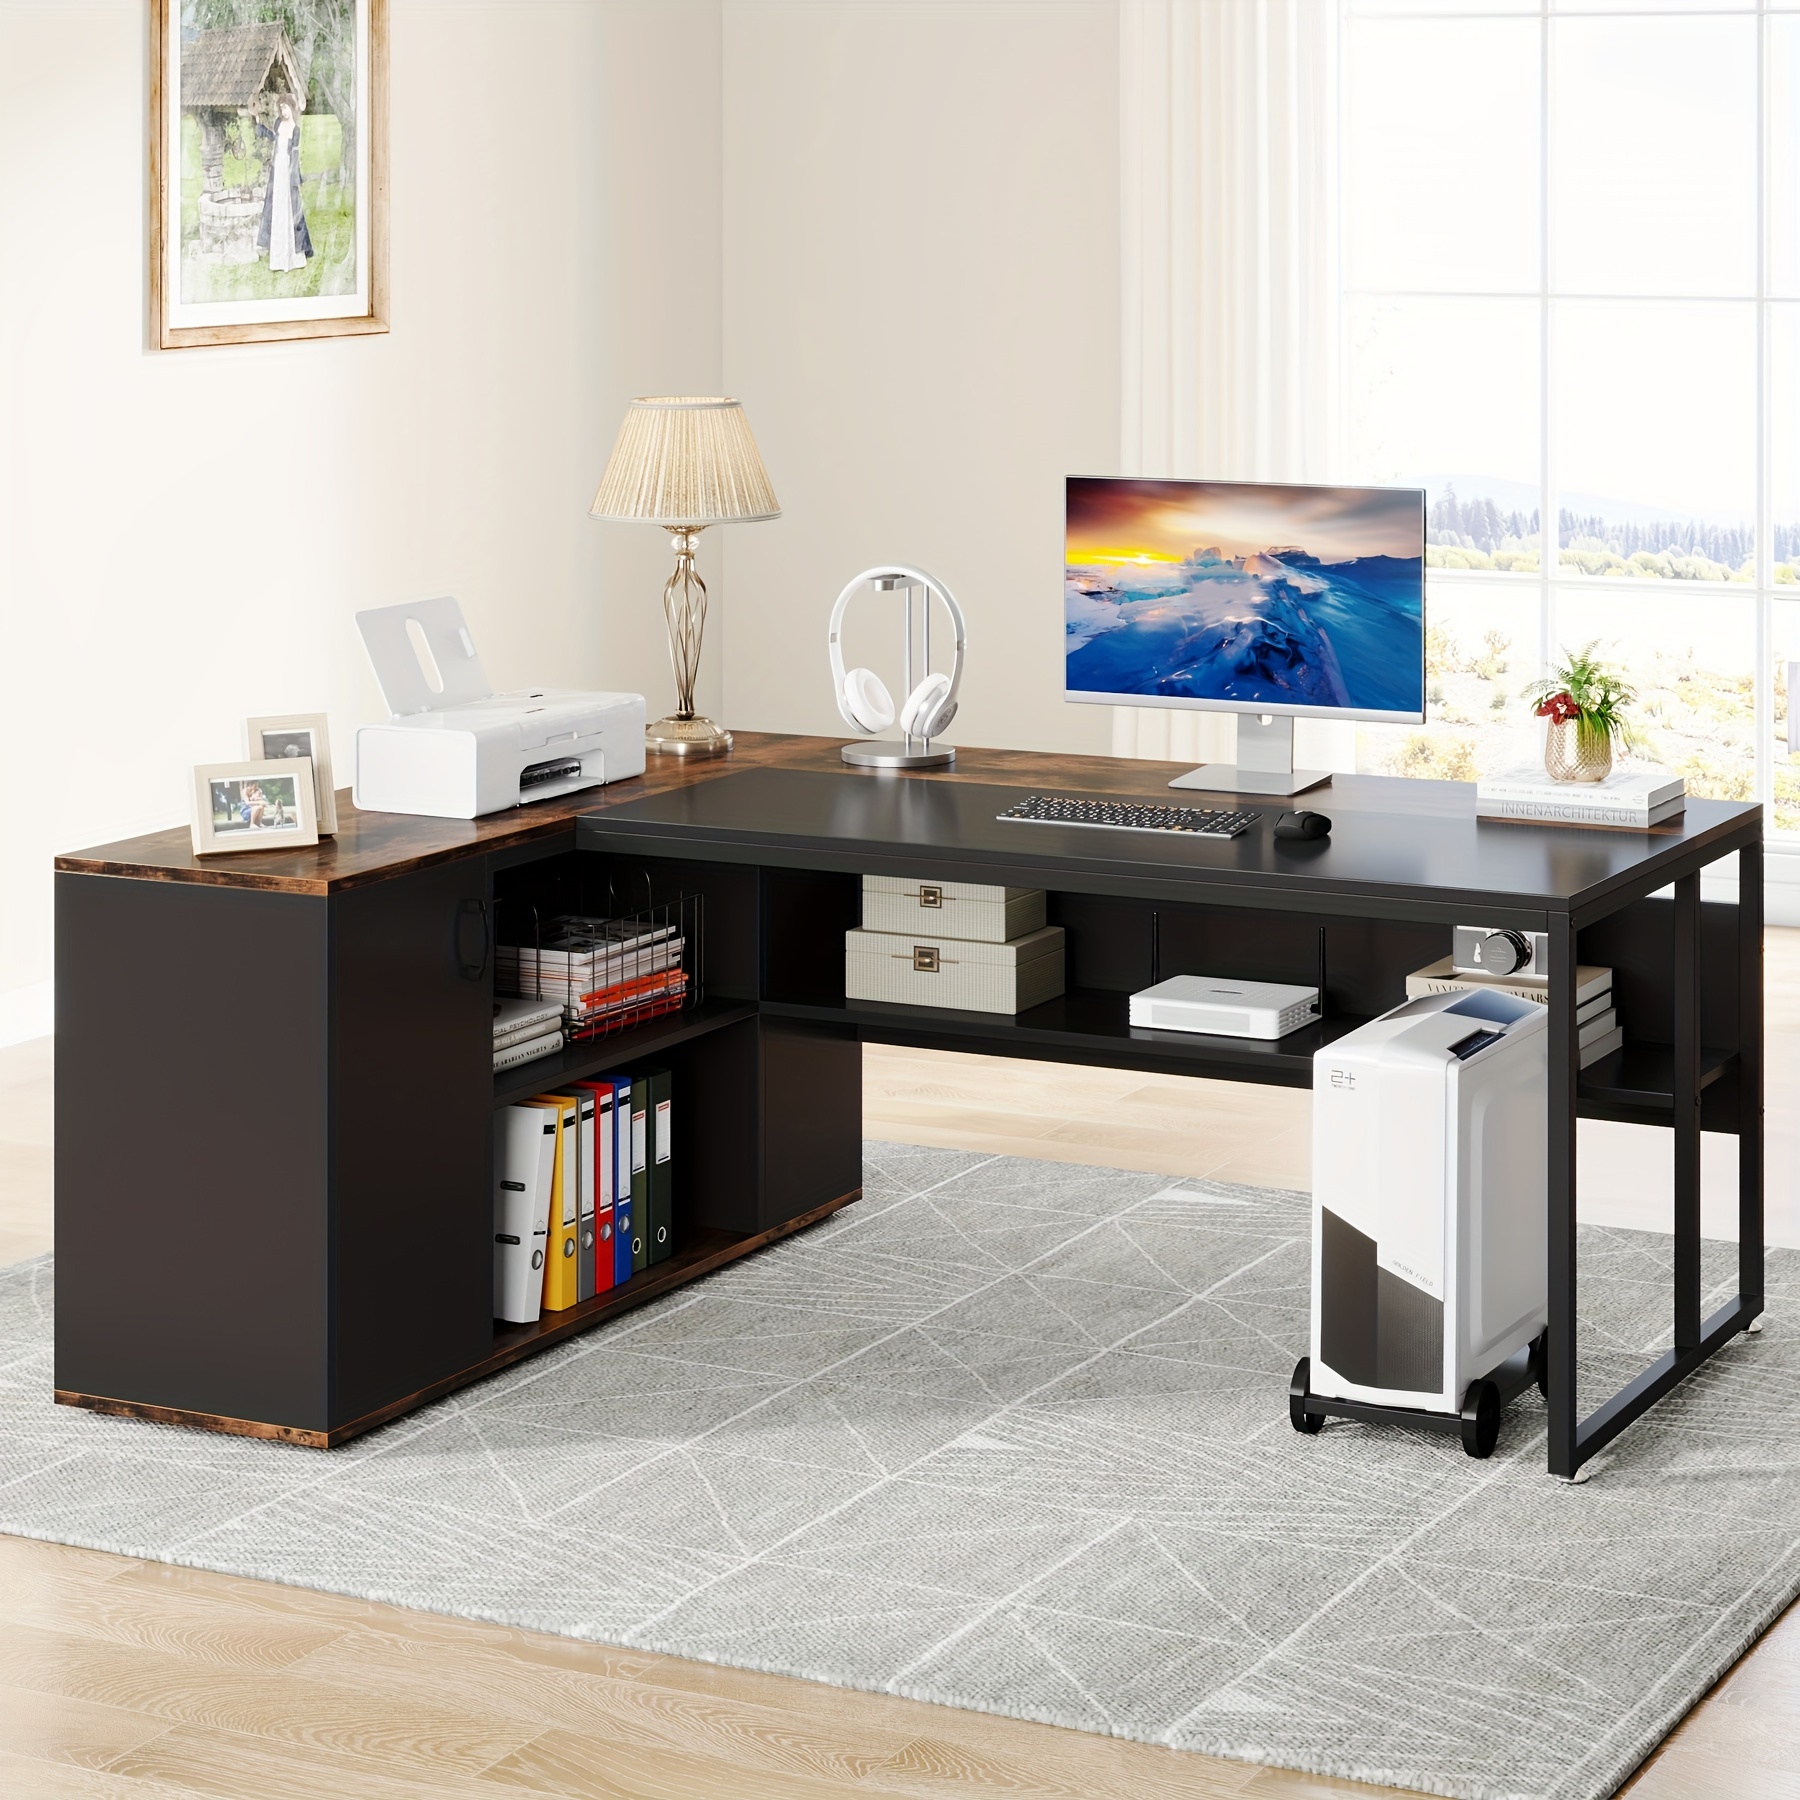 

Little Tree Executive Office Desk With Shelves, L Shaped Desk With Cabinet Storage, 71 Inch Executive Desk, Business Furniture Desk Workstation For Home Office